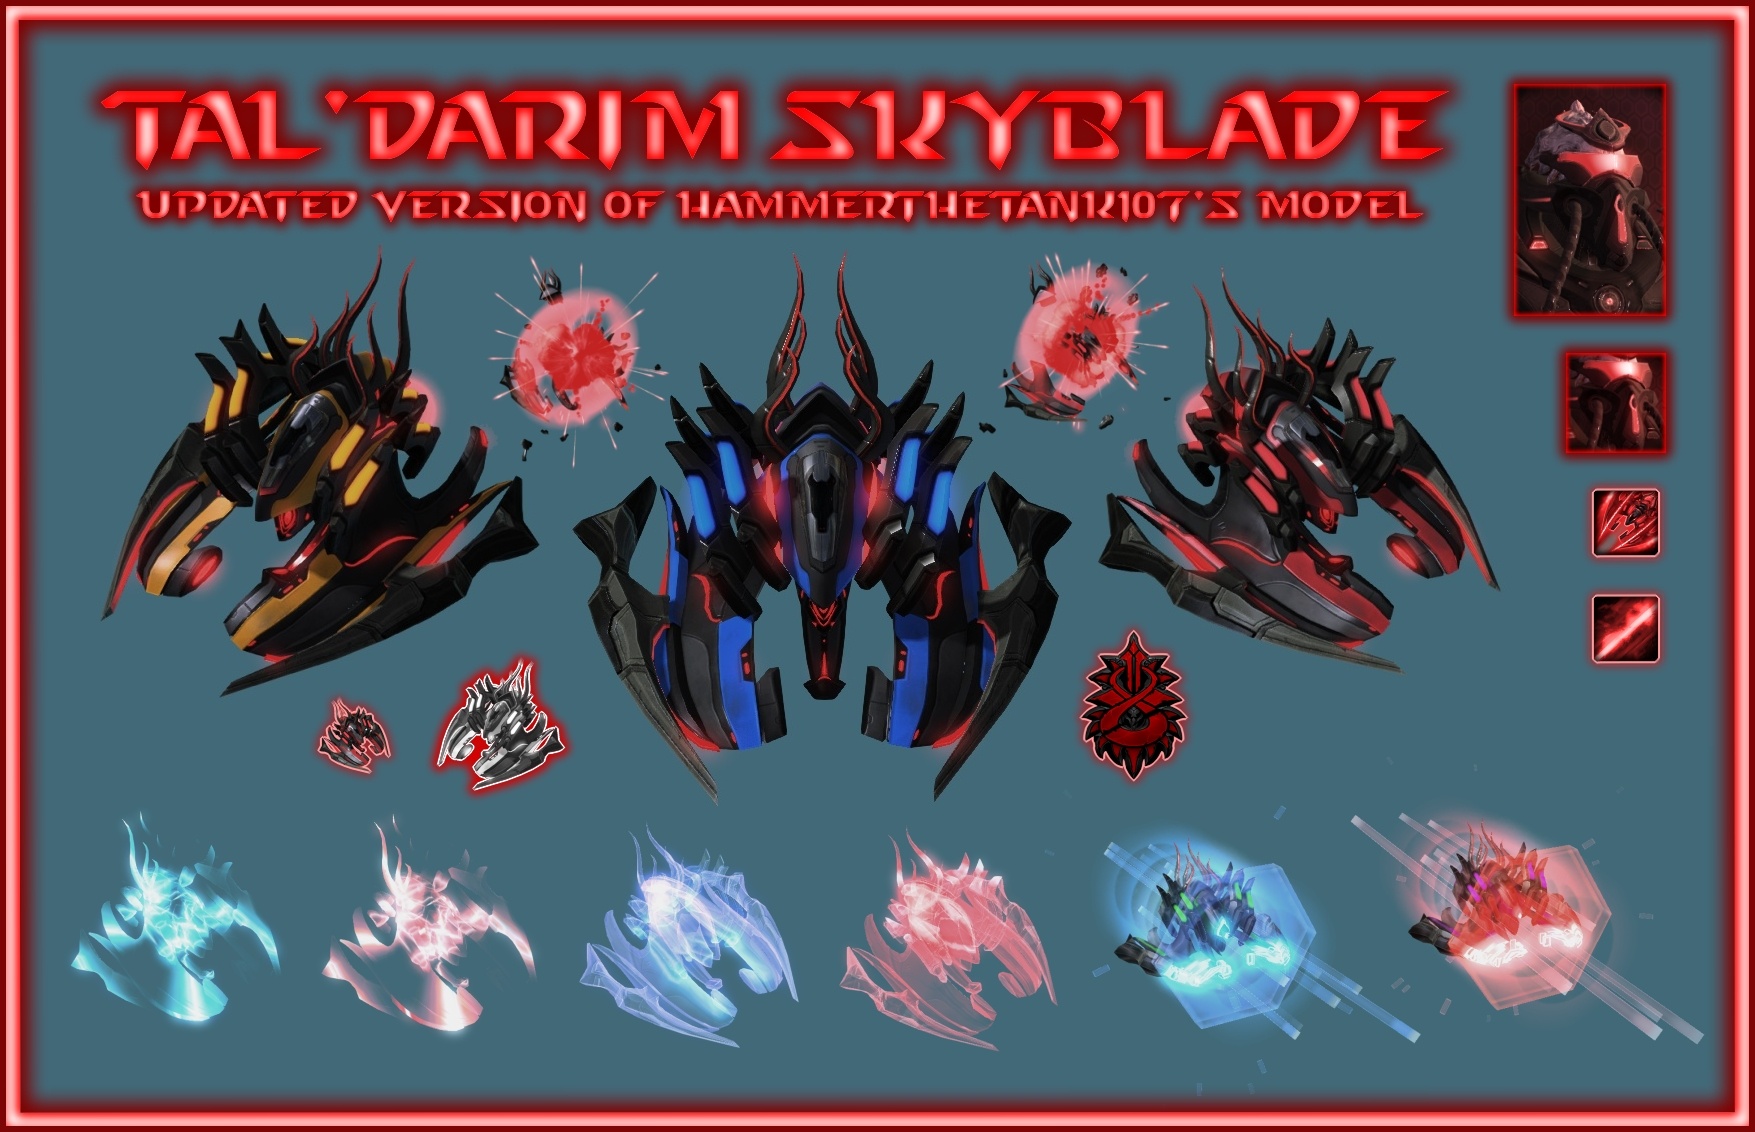 Skyblade - Tal'darim Corsair (Updated version of Hammer's model)